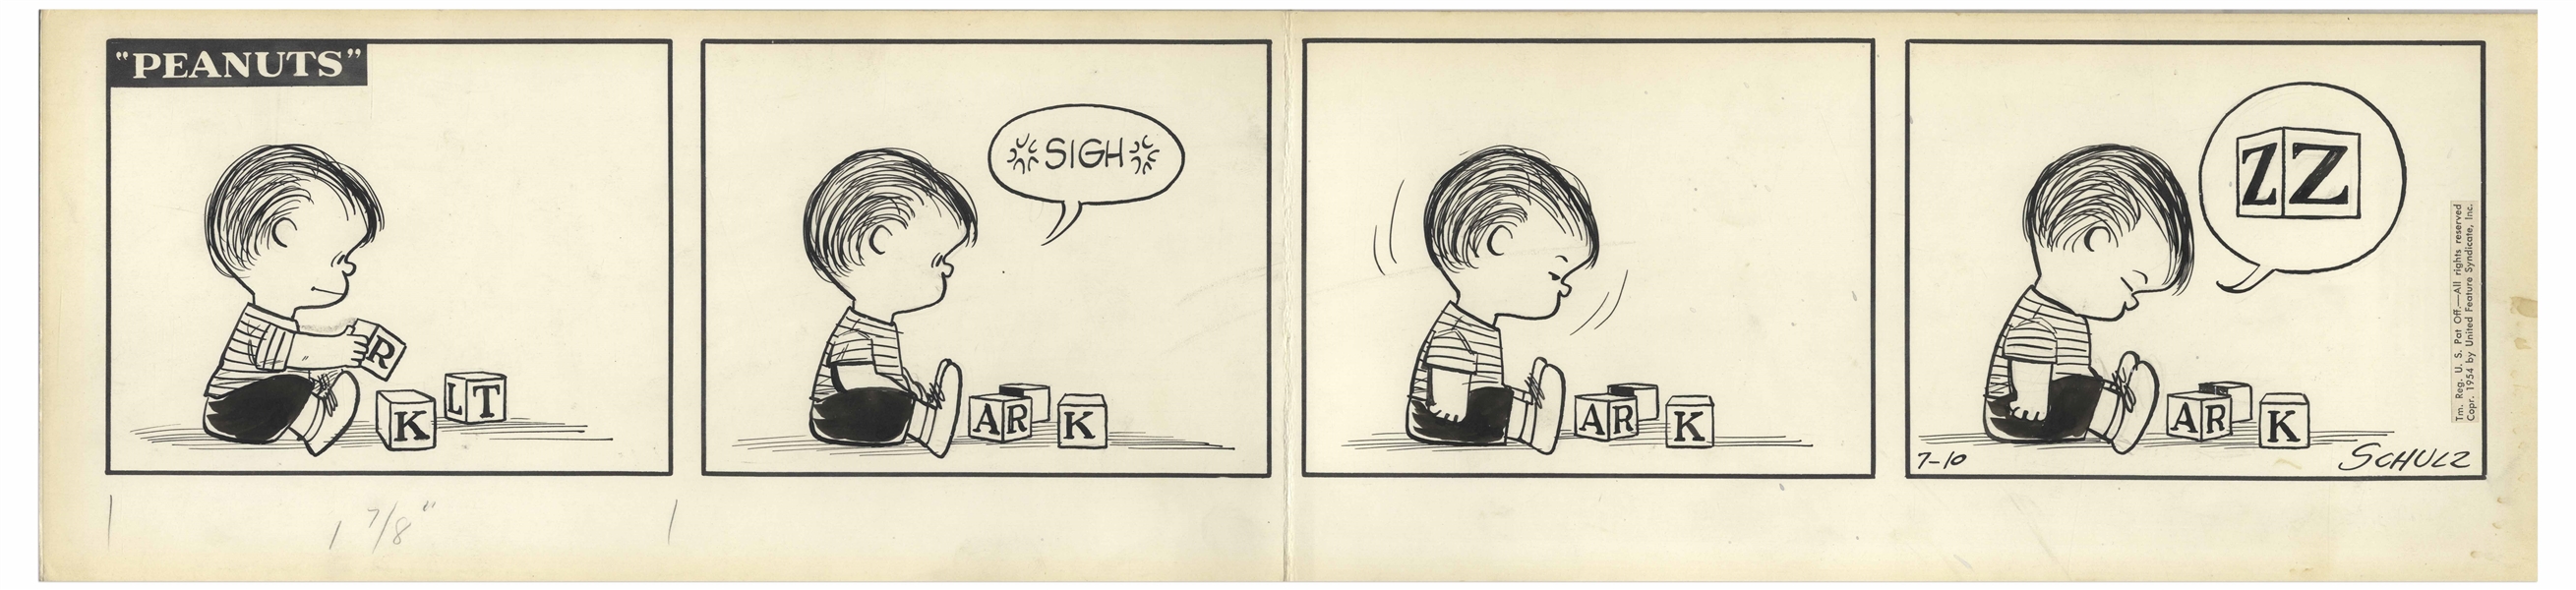 Charles Schulz Original 1954 ''Peanuts'' Comic Strip, Featuring Linus